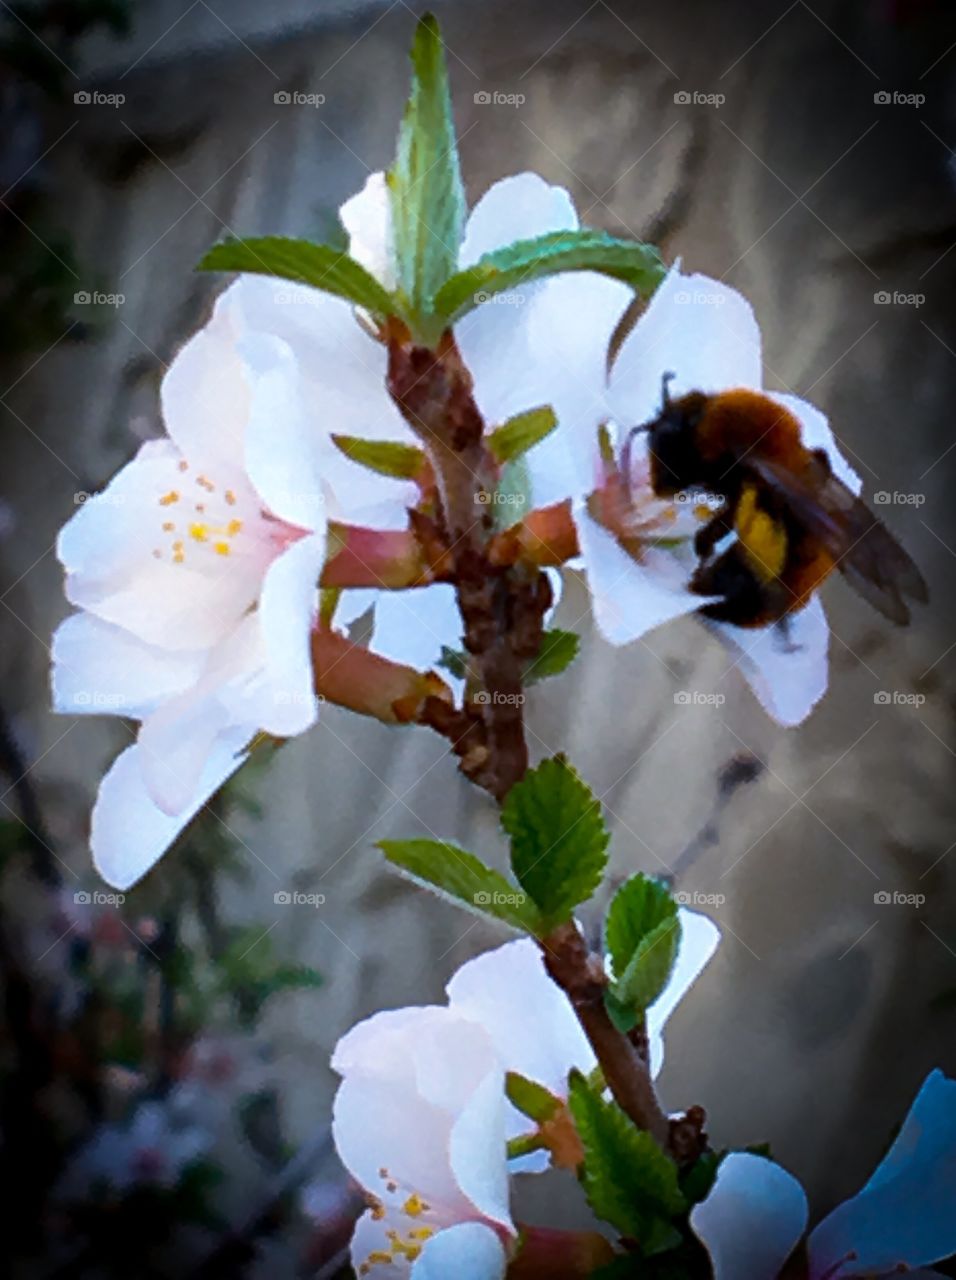 Bee enjoying nectar on a cherry flower